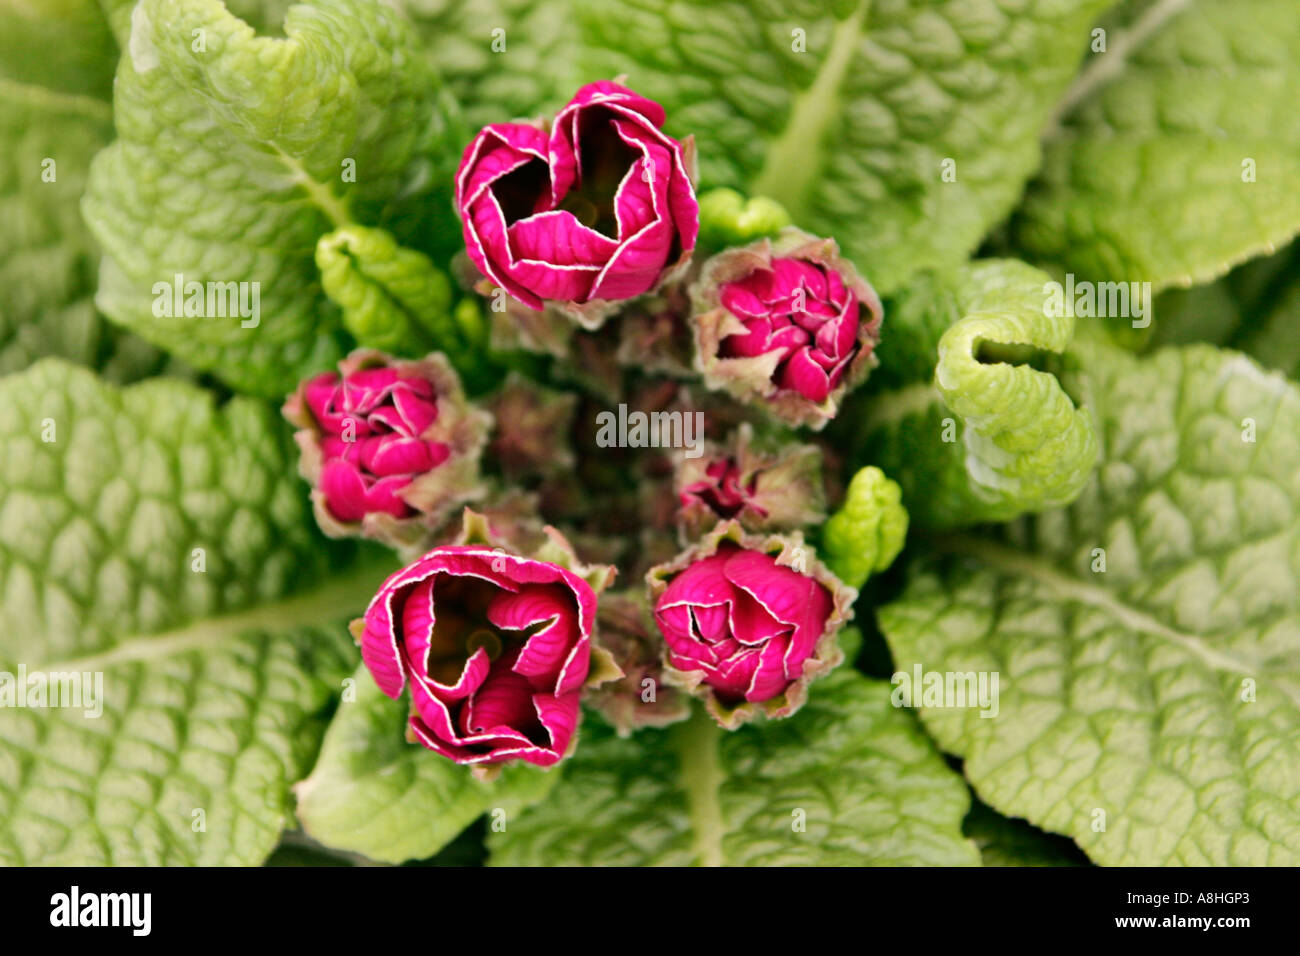 Primrose in a gardening Stock Photo